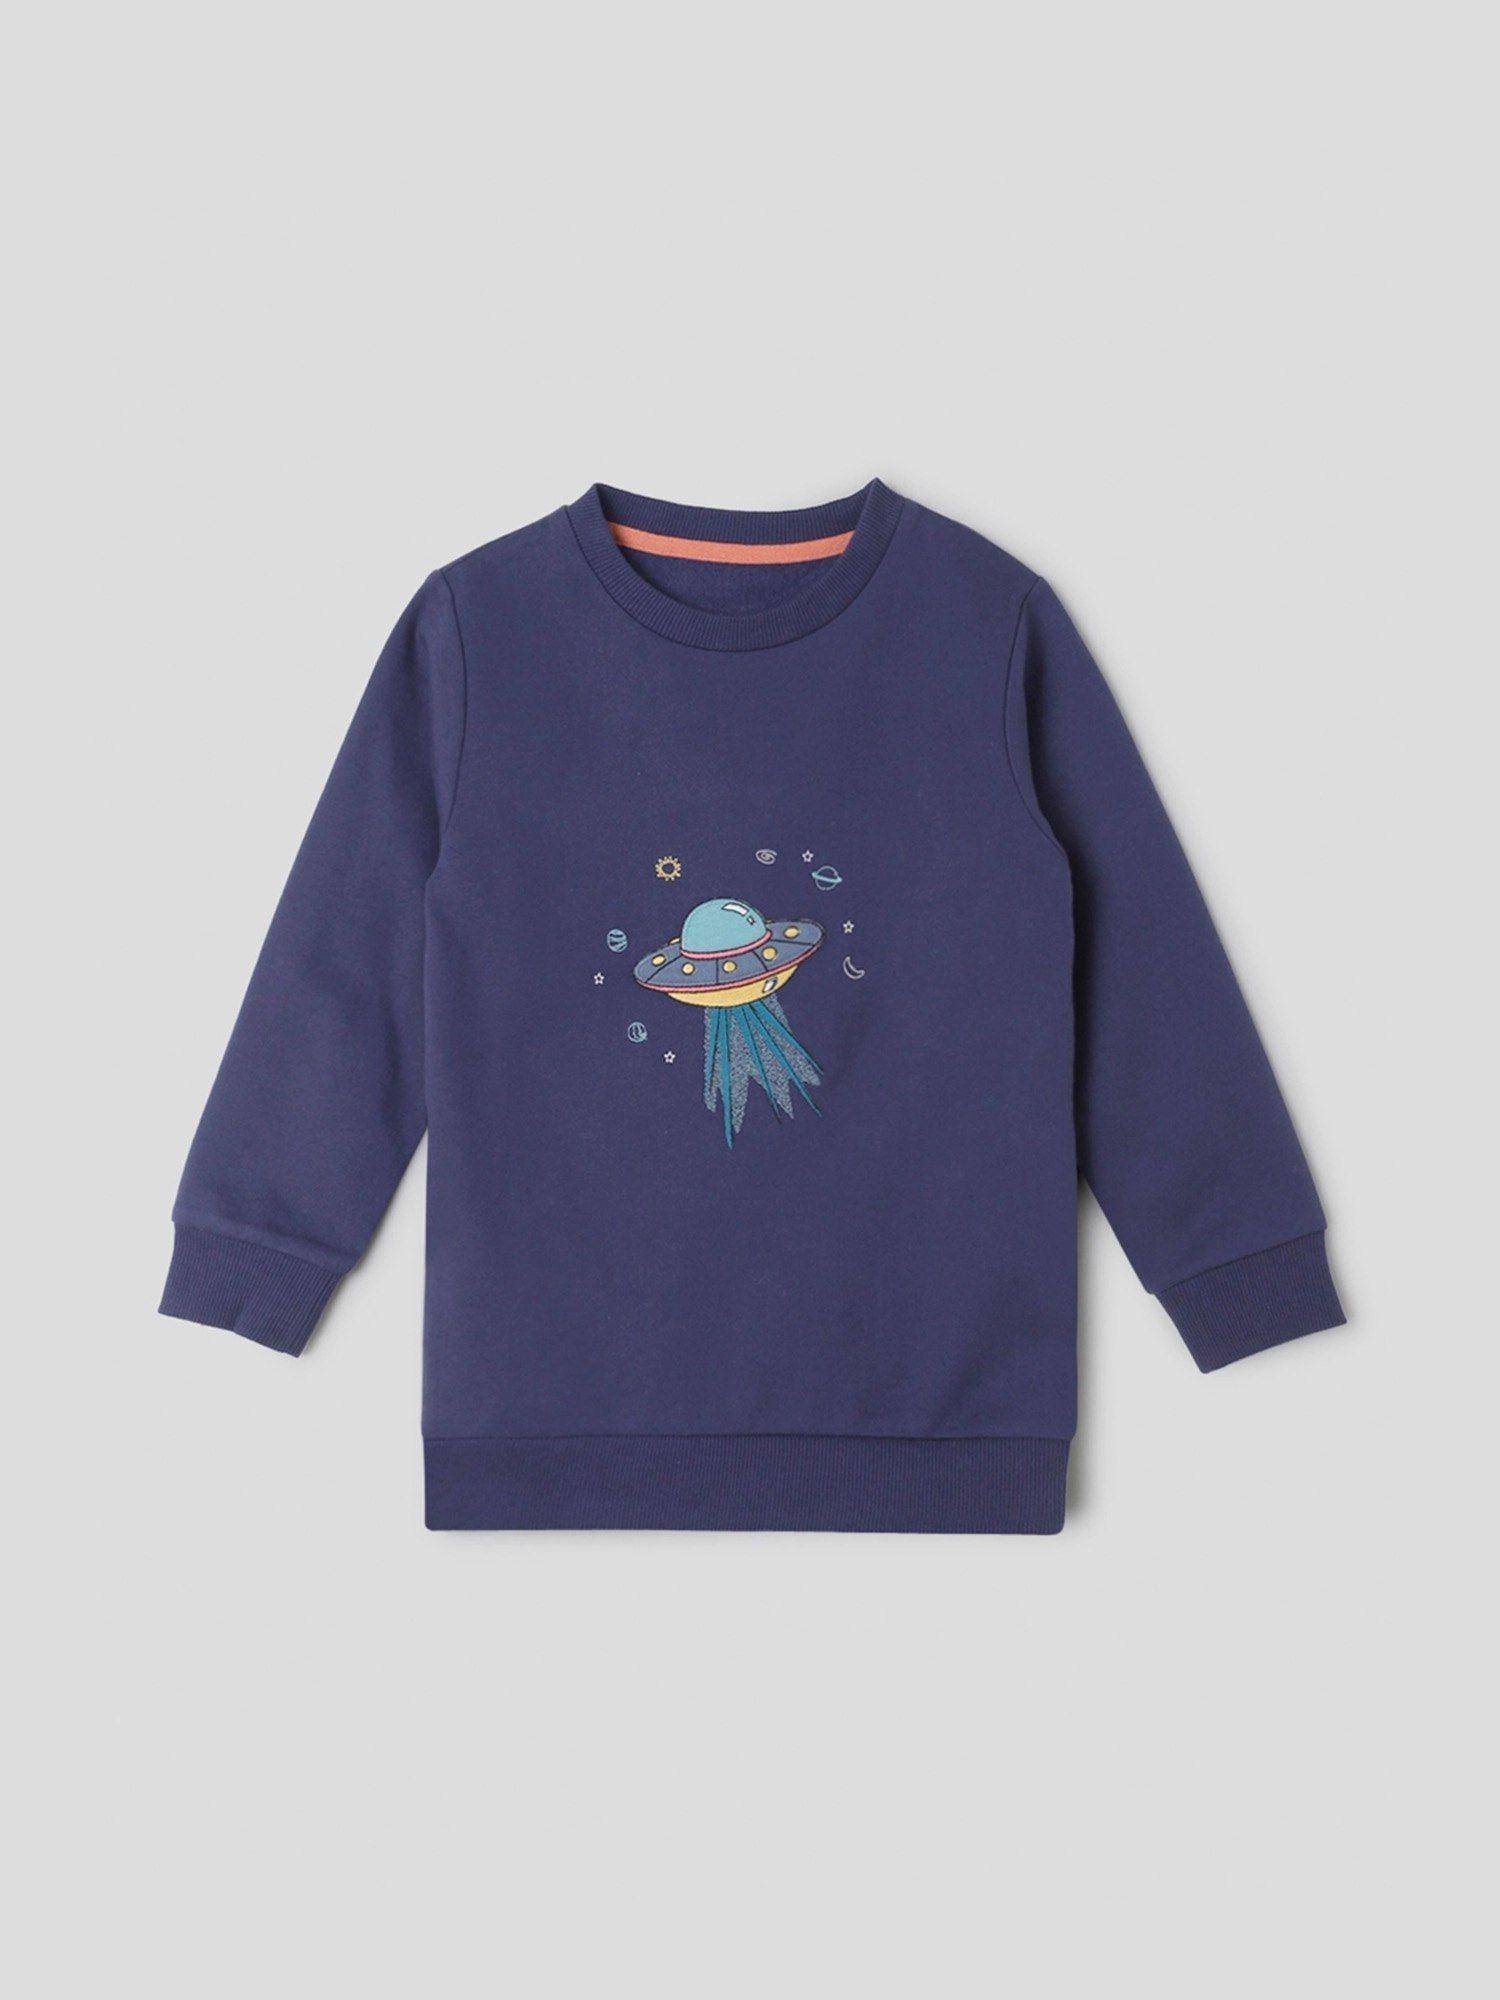 spaceship sweatshirt